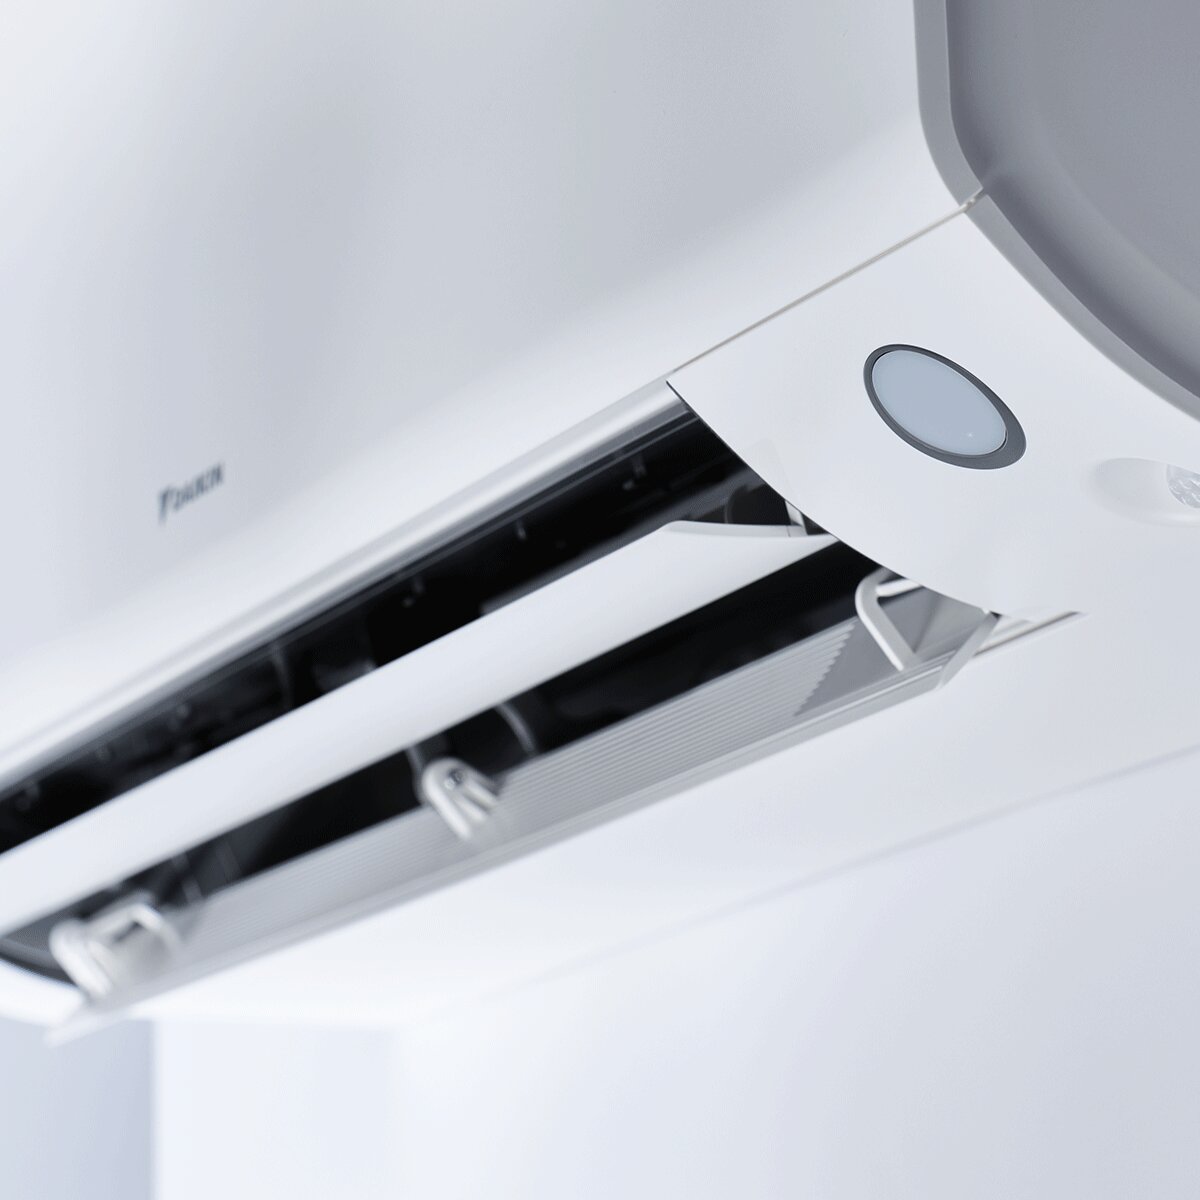 Daikin Perfera All Seasons trial split air conditioner 7000+9000+18000 BTU inverter A++ wifi external unit 6.8 kW